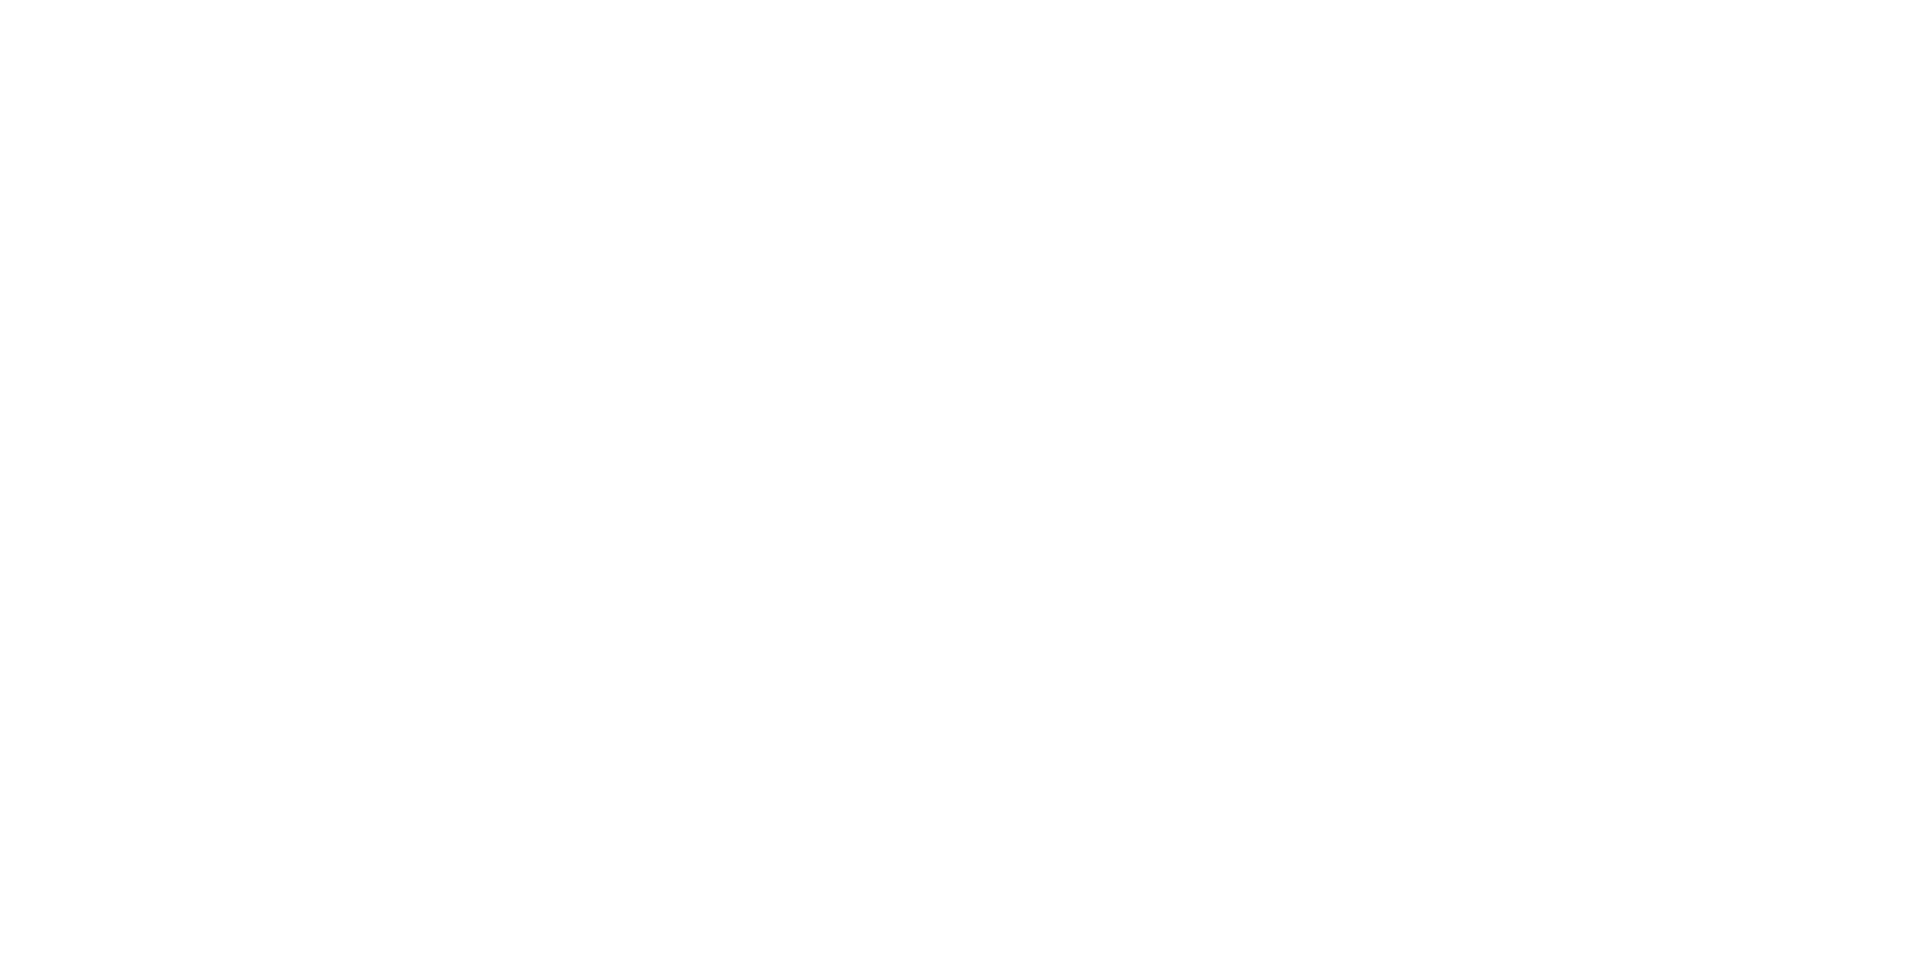 Atout Cœur Wedding